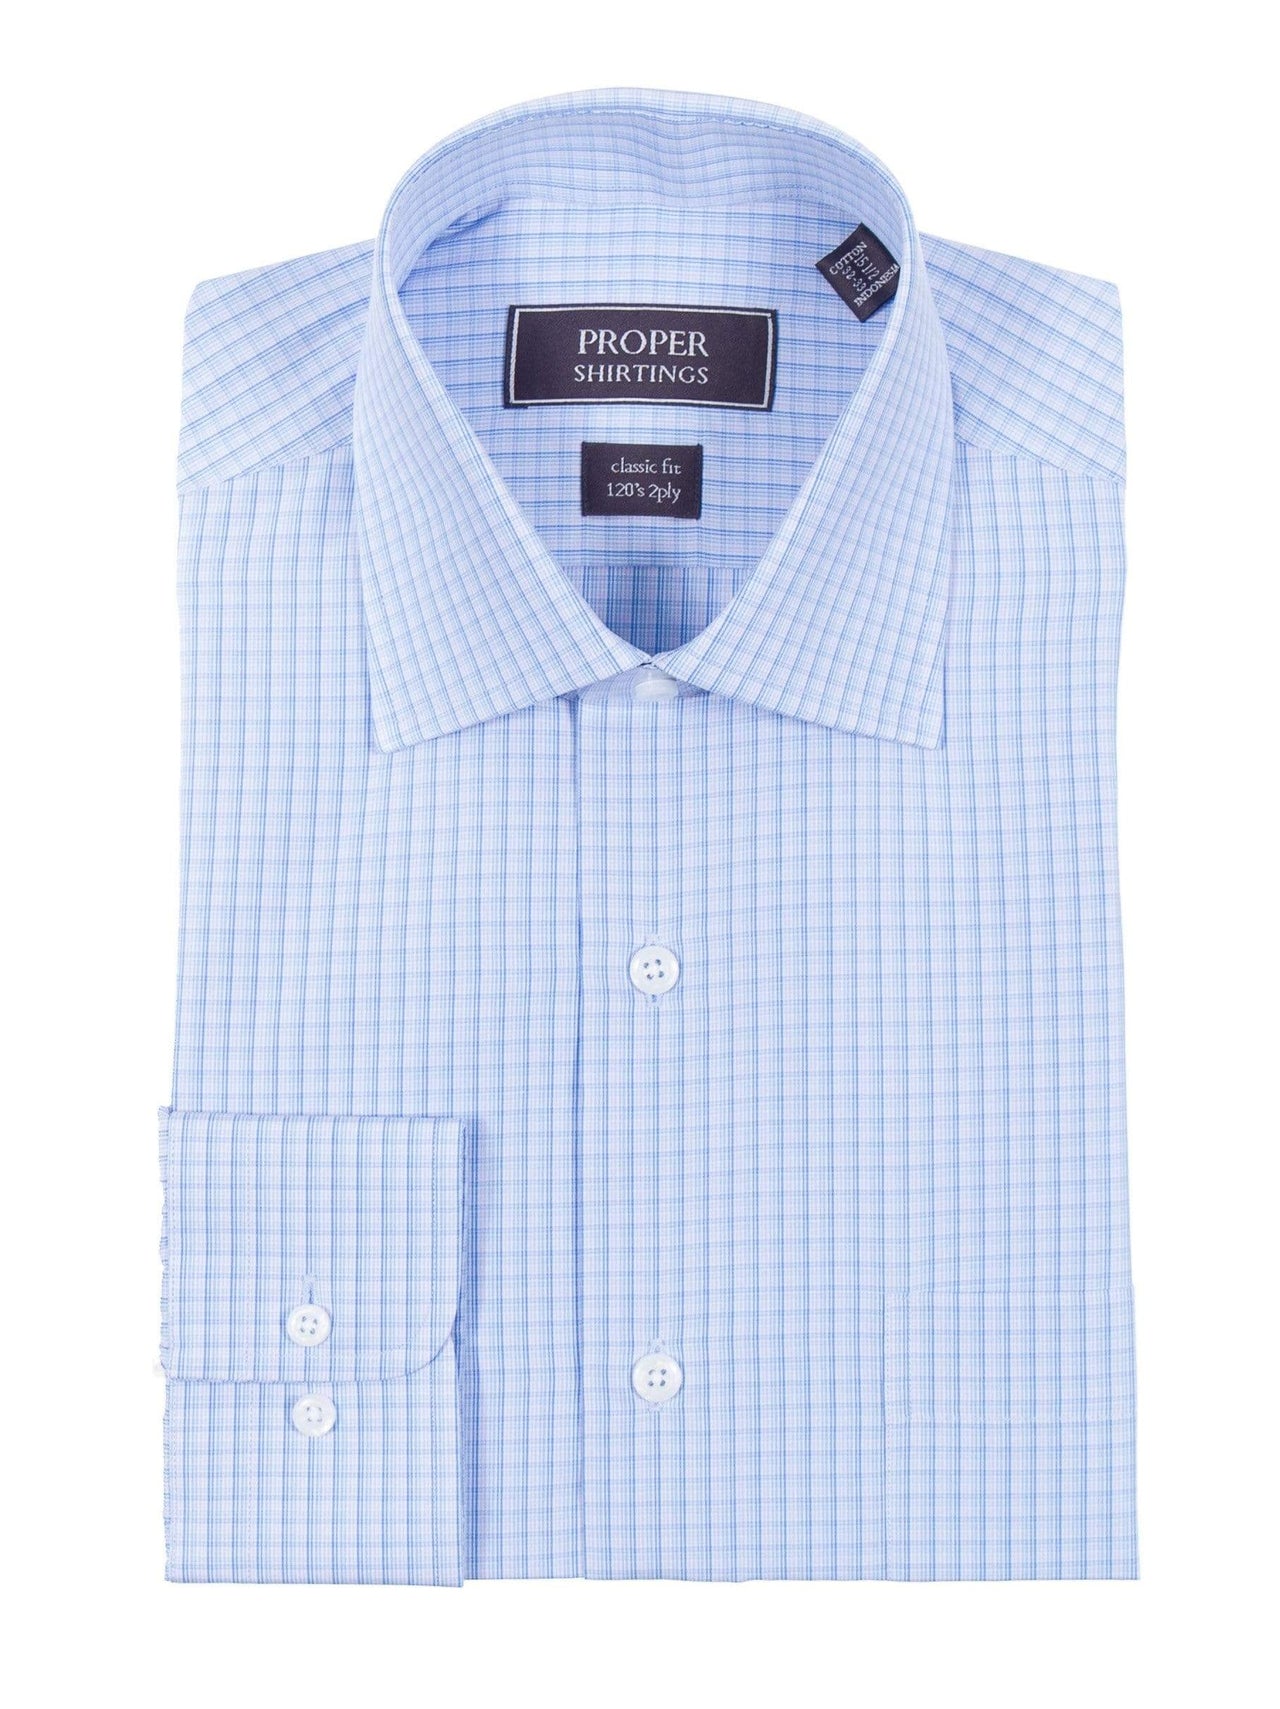 Proper Shirtings SHIRTS 15 32/33 Classic Fit Blue & Subtle Pink Check 120's 2Ply Cotton Dress Shirt